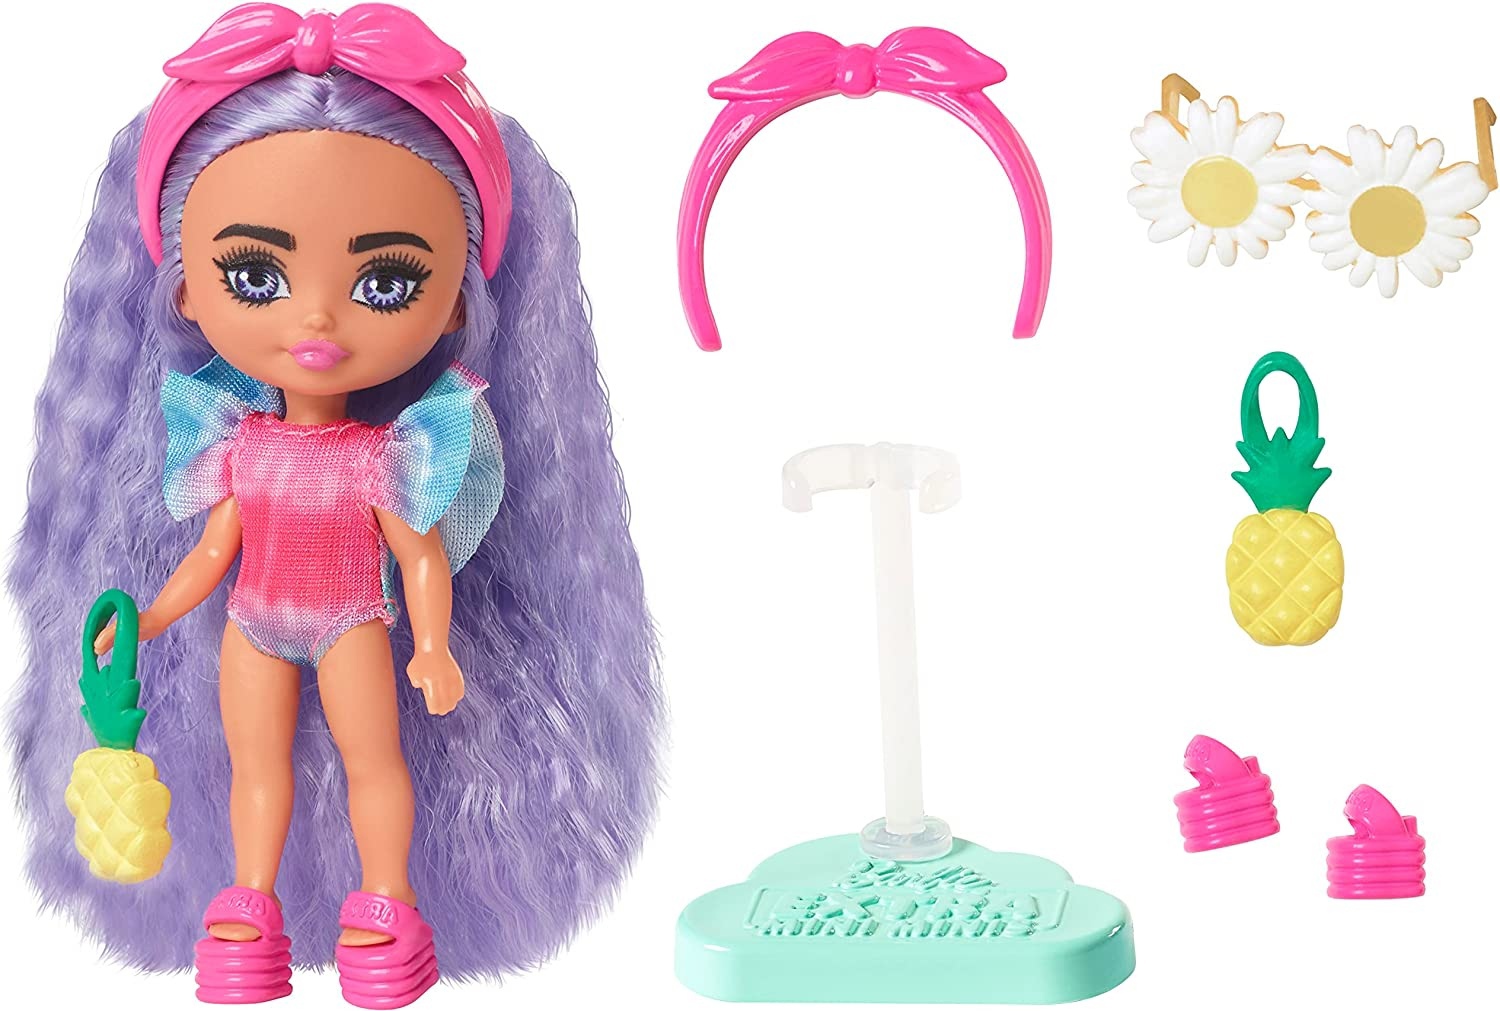 Barbie Extra Mini Minis 5 Barbie Poupées Pack Neuf 2023